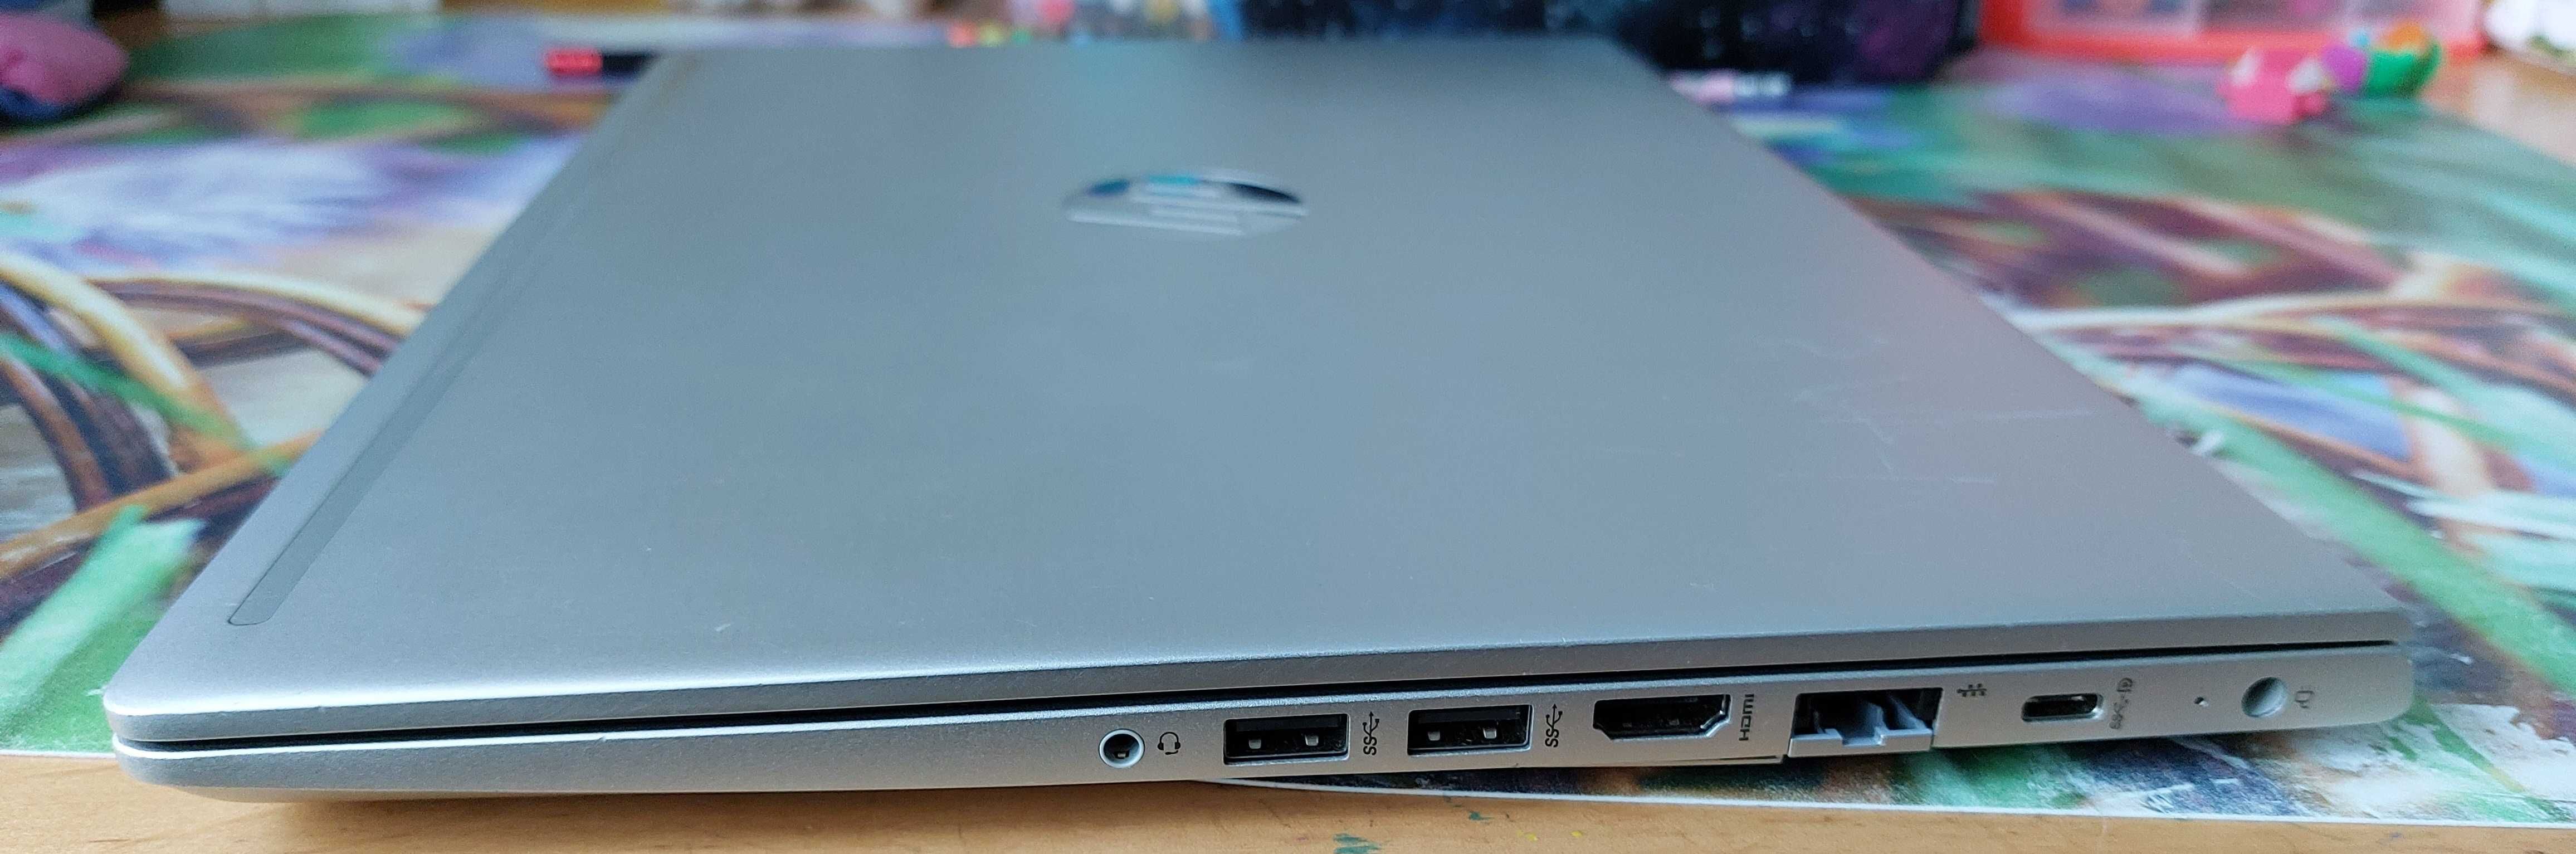 Laptop HP ProBook 440 G6 16gb ram 256gb ssd alu